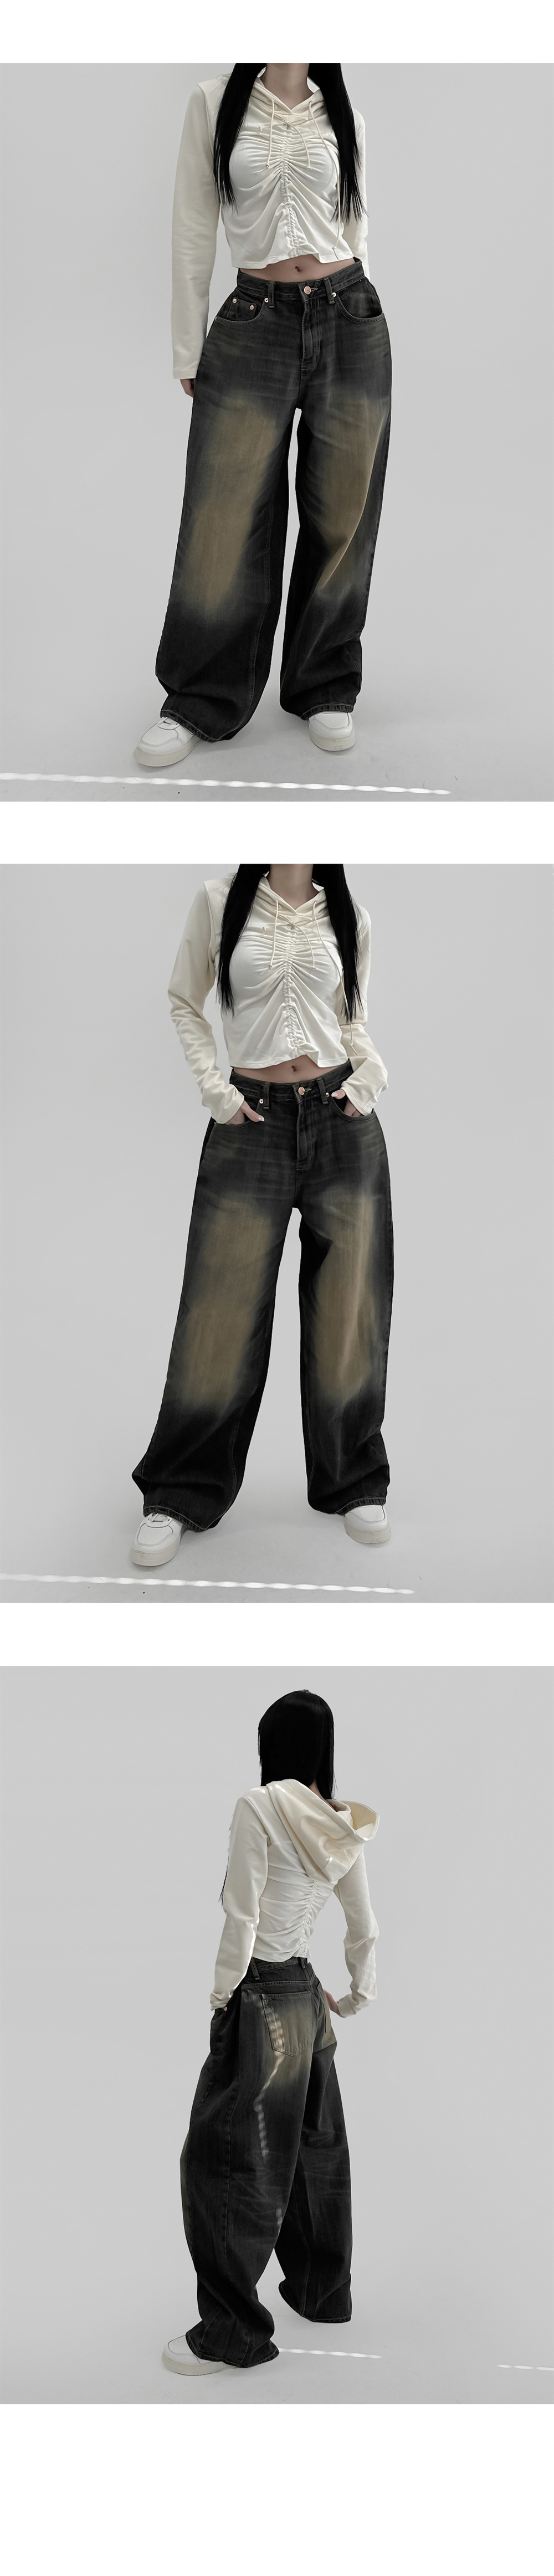 suspenders skirt/pants charcoal color image-S1L3